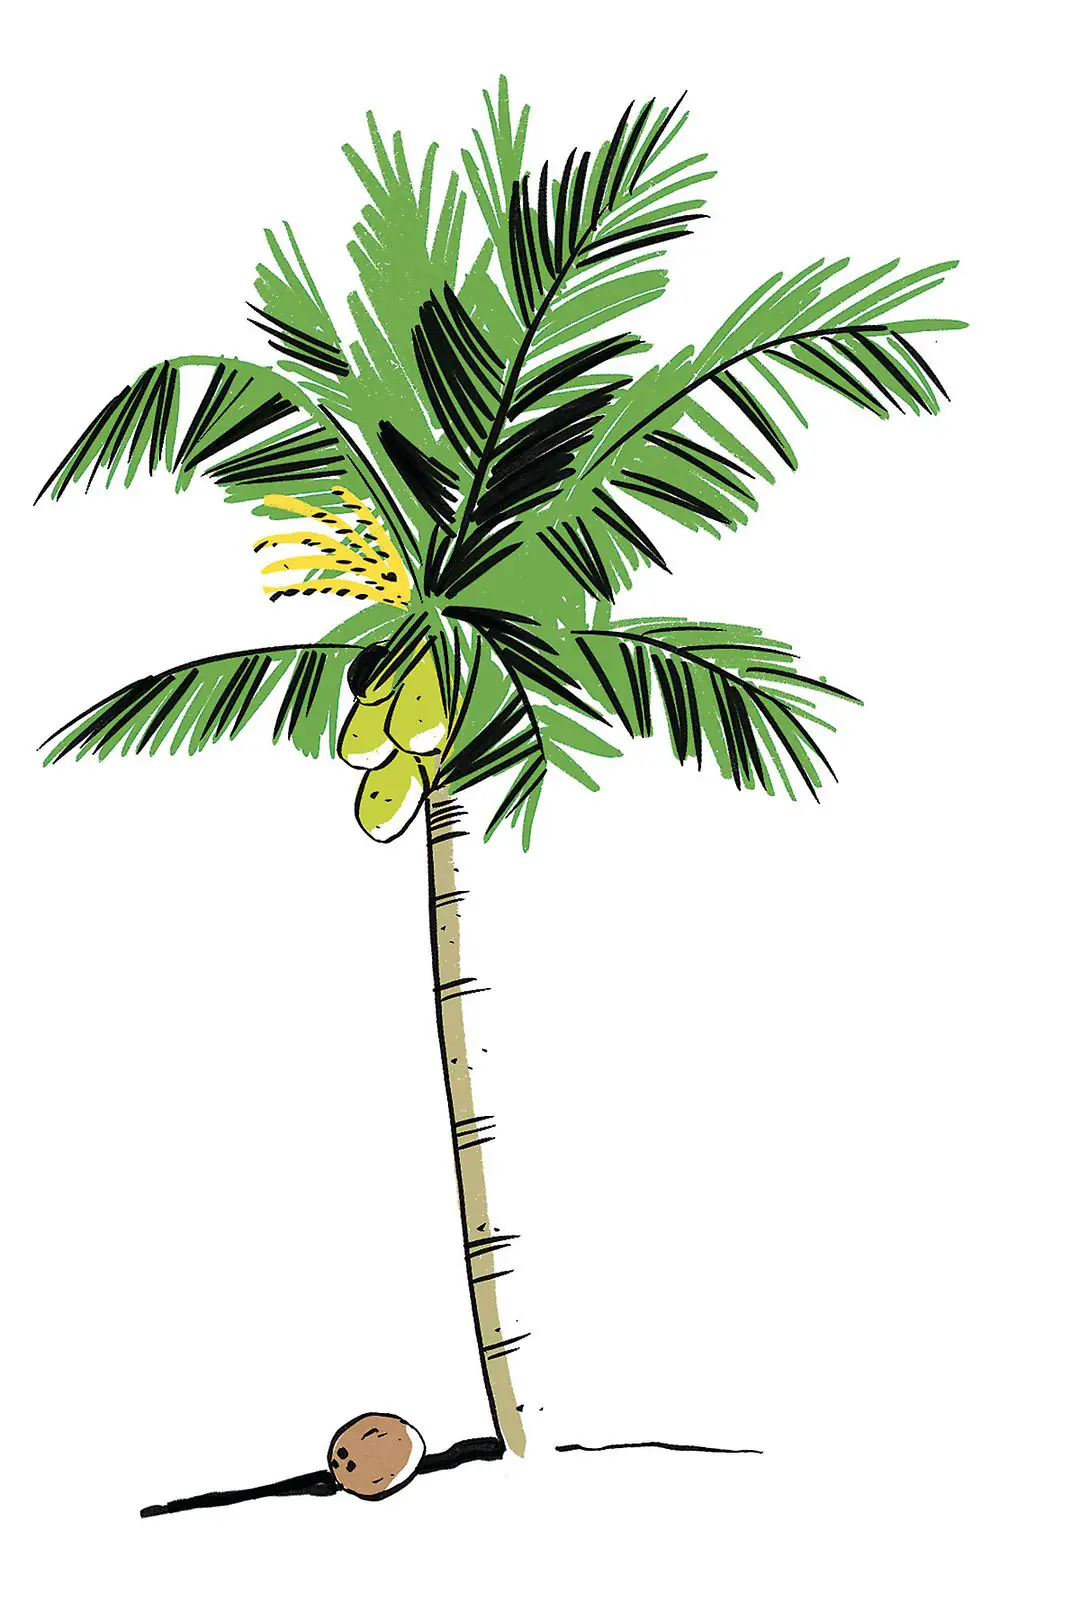 Christian Symbolism Of Palm Trees